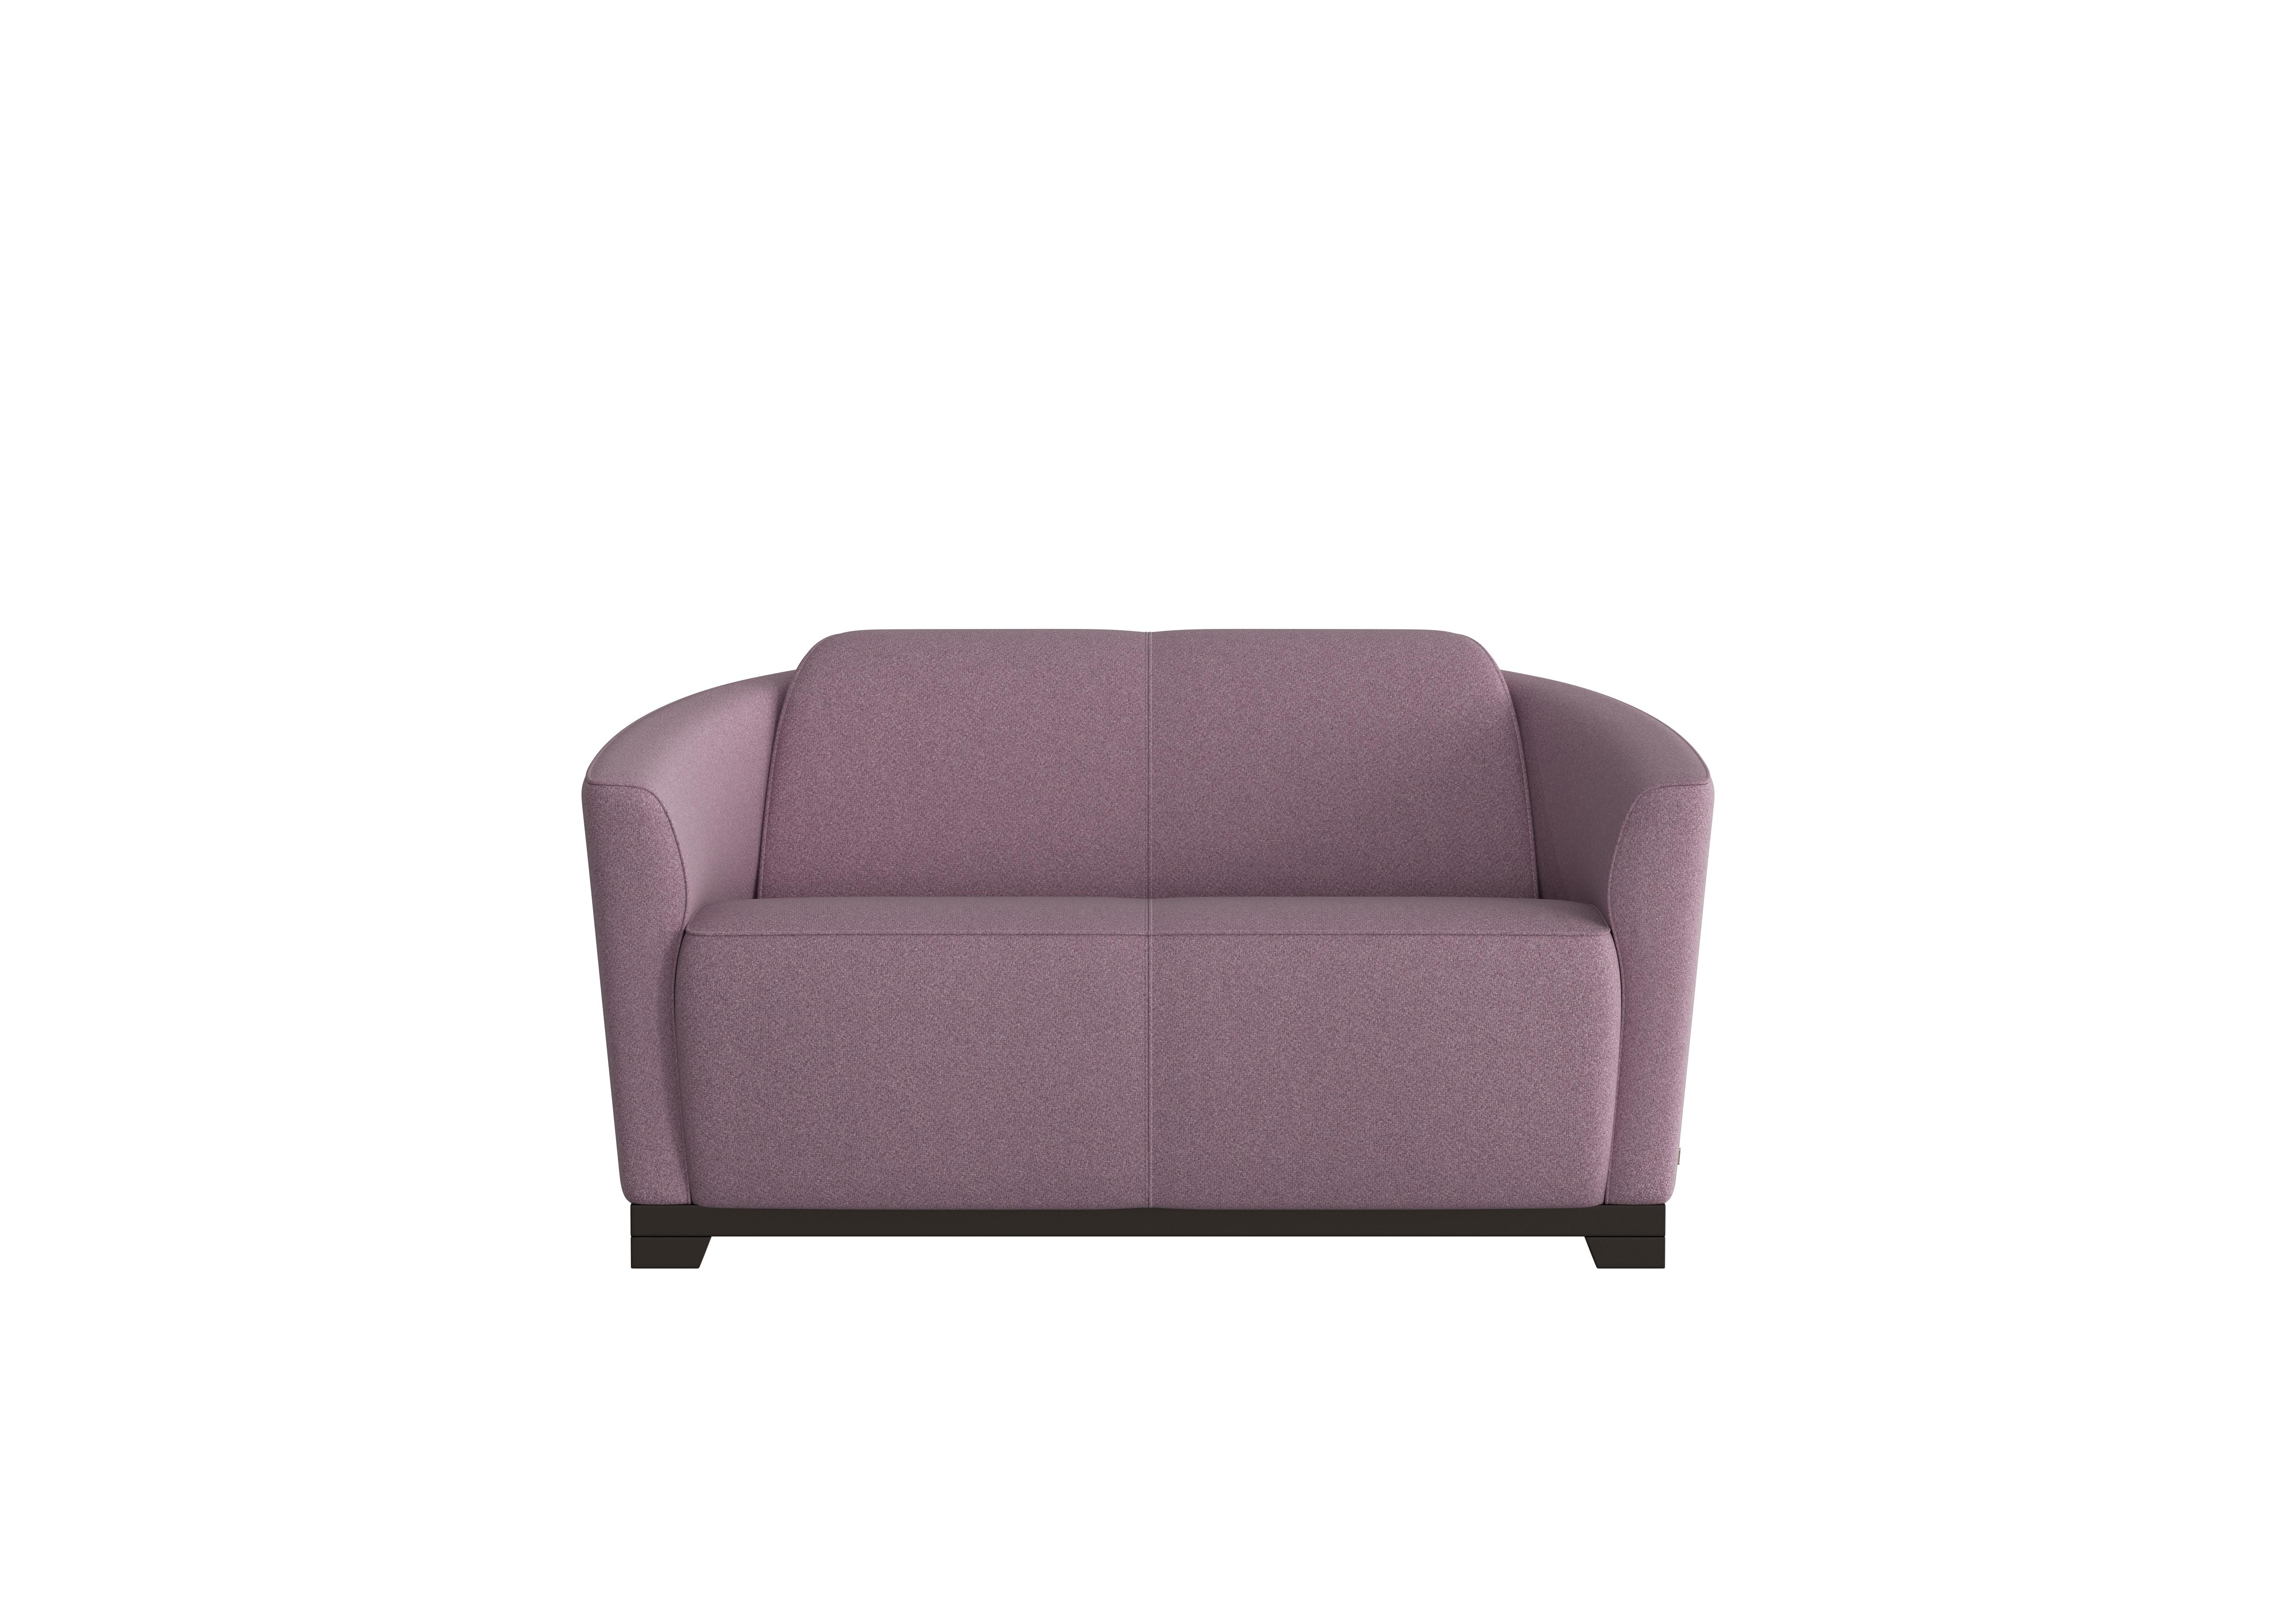 Ketty 2 Seater Fabric Sofa in Coupe Glicine 003 on Furniture Village